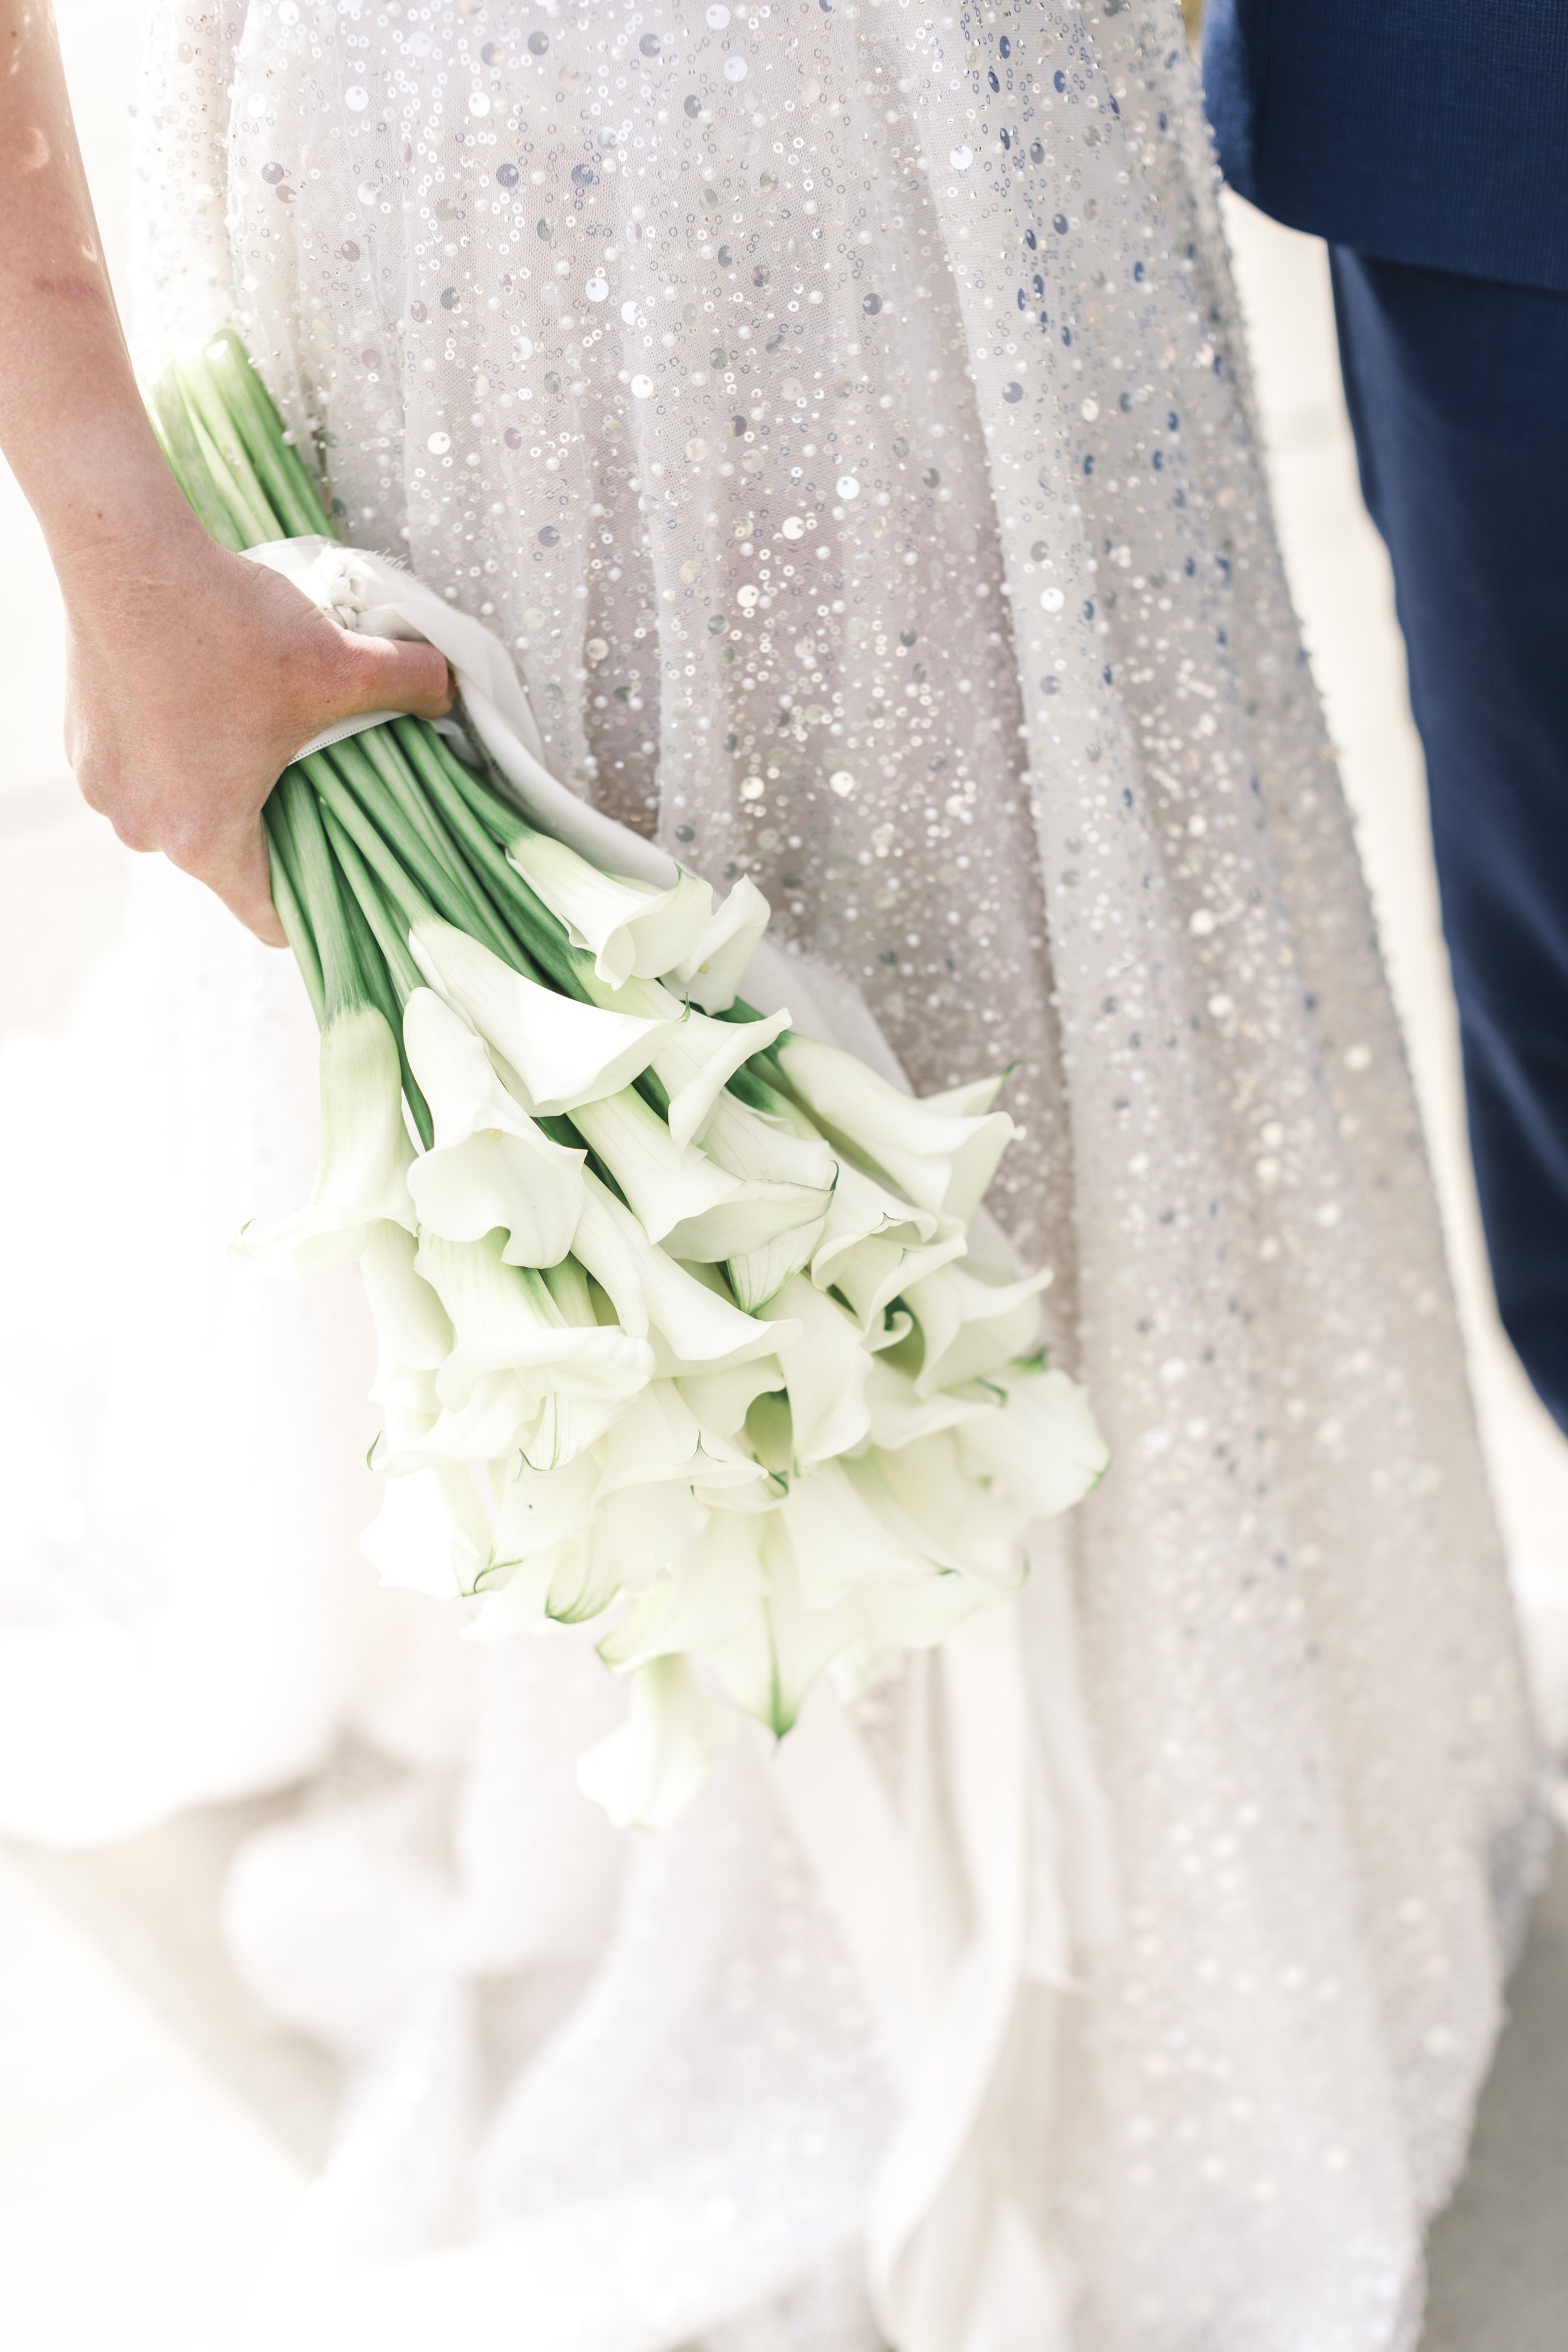  Savanna Richardson Photography captures a bride wearing a sparkly dress and holding a bouquet of lilies. lily bouquet #SavannaRichardsonPhotography #SavannaRichardsonWeddings #bridals #formals #bouquets #Utahweddingphotographers #Wedding 